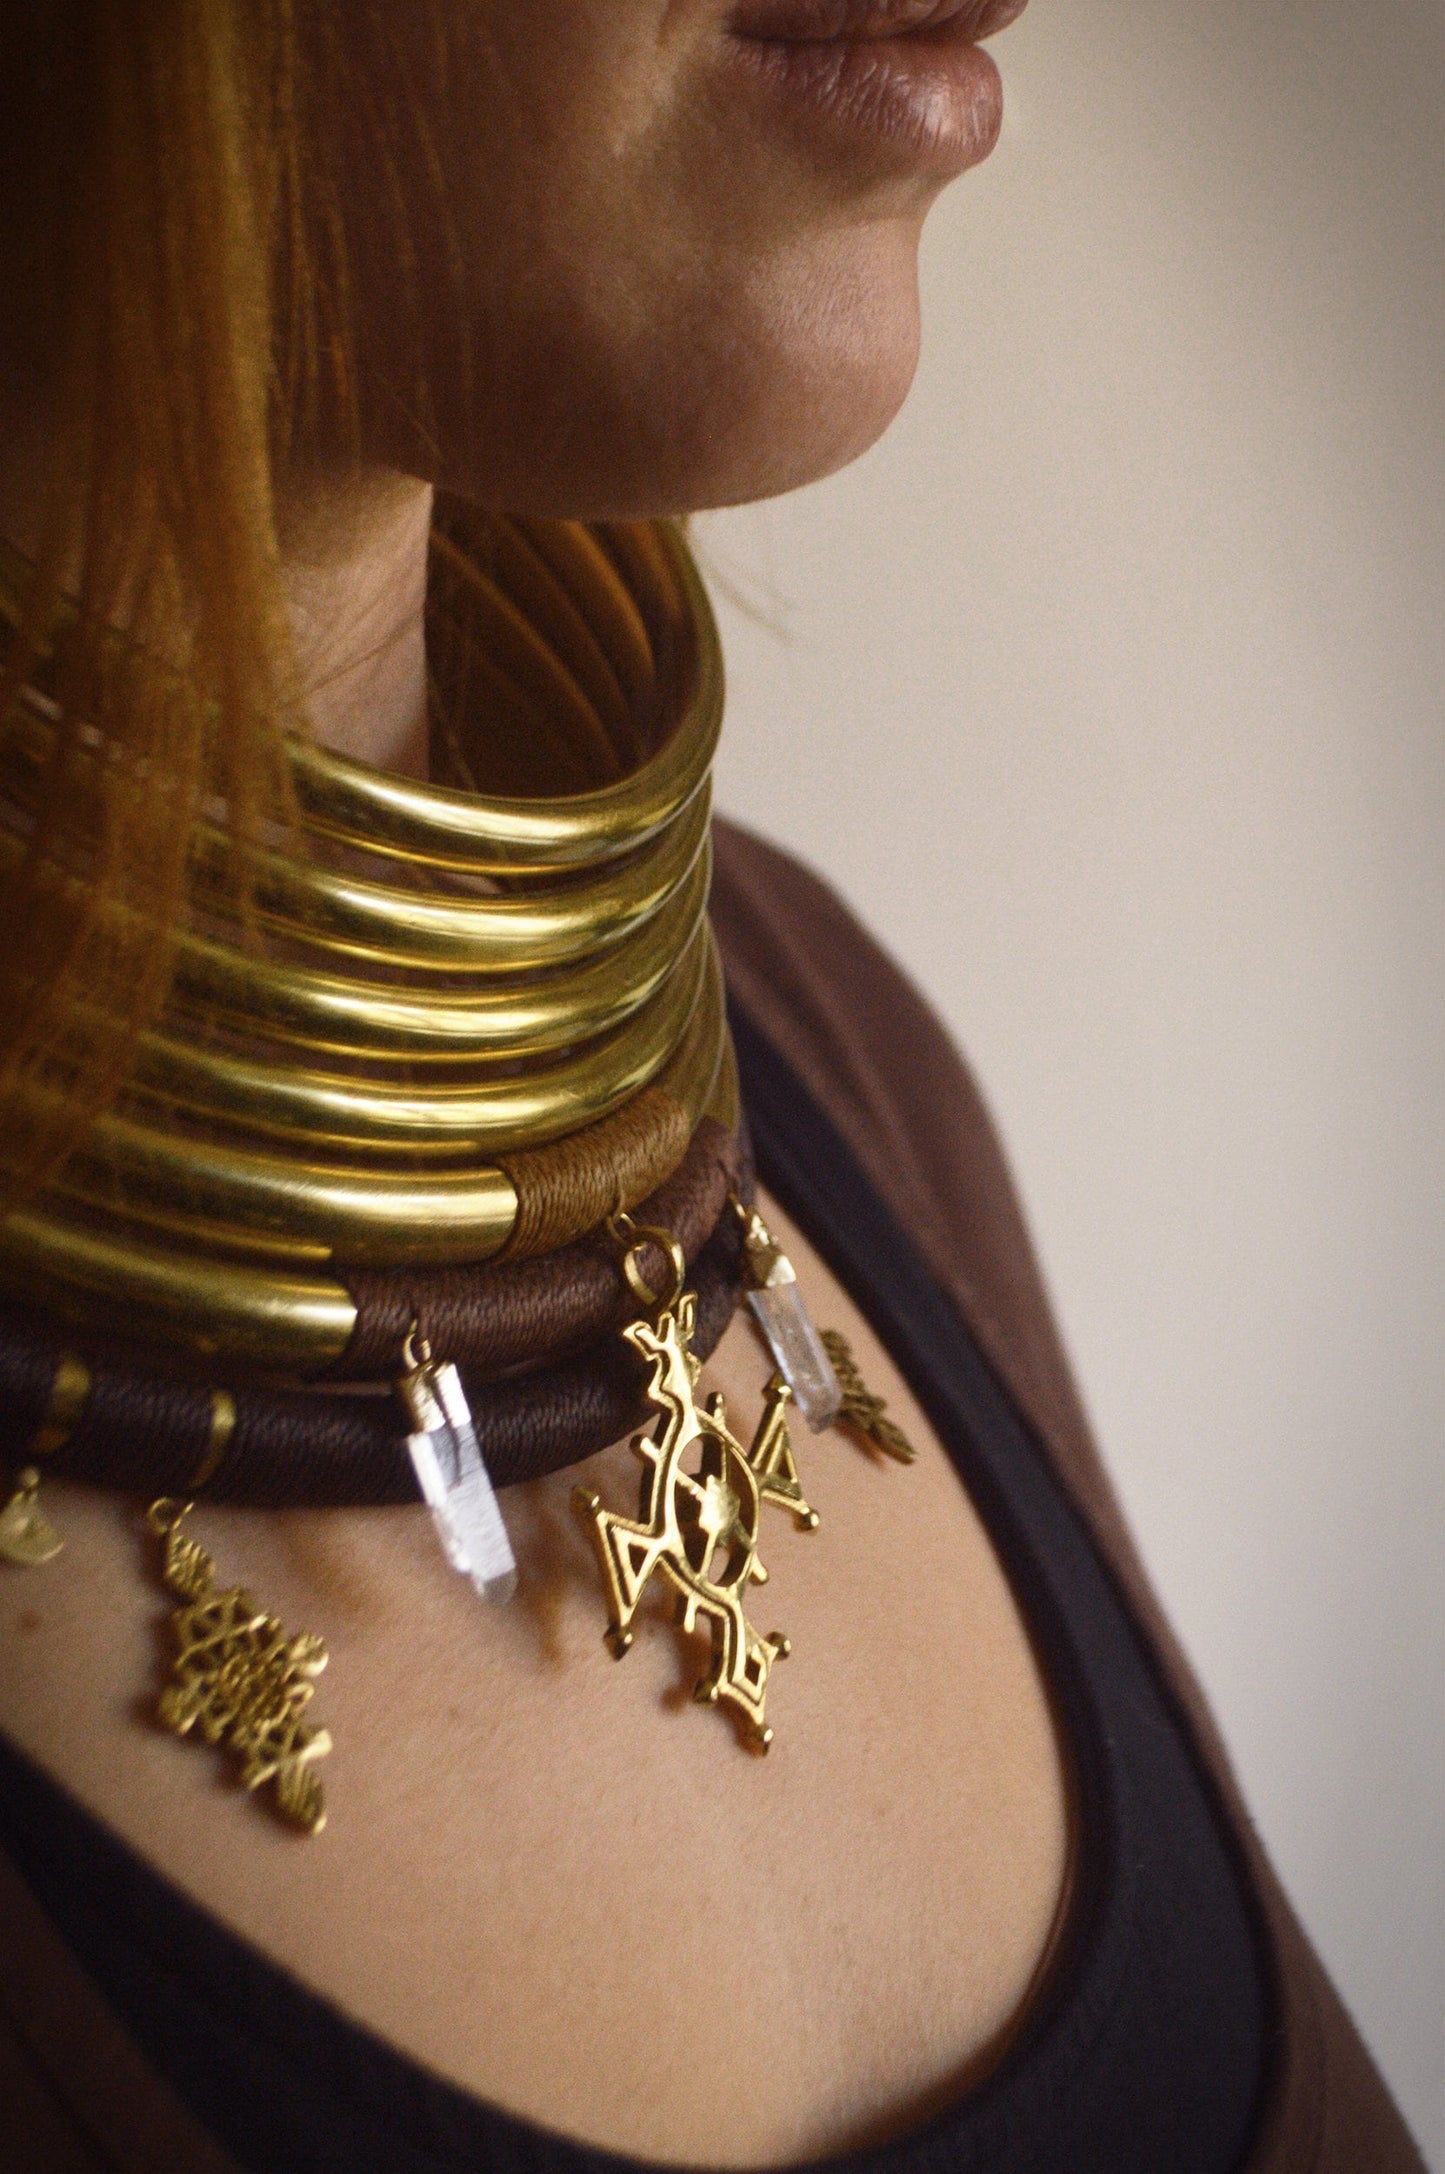 Tribal goddess, giraffe macrame collar with body harness, quartz points and berber charms